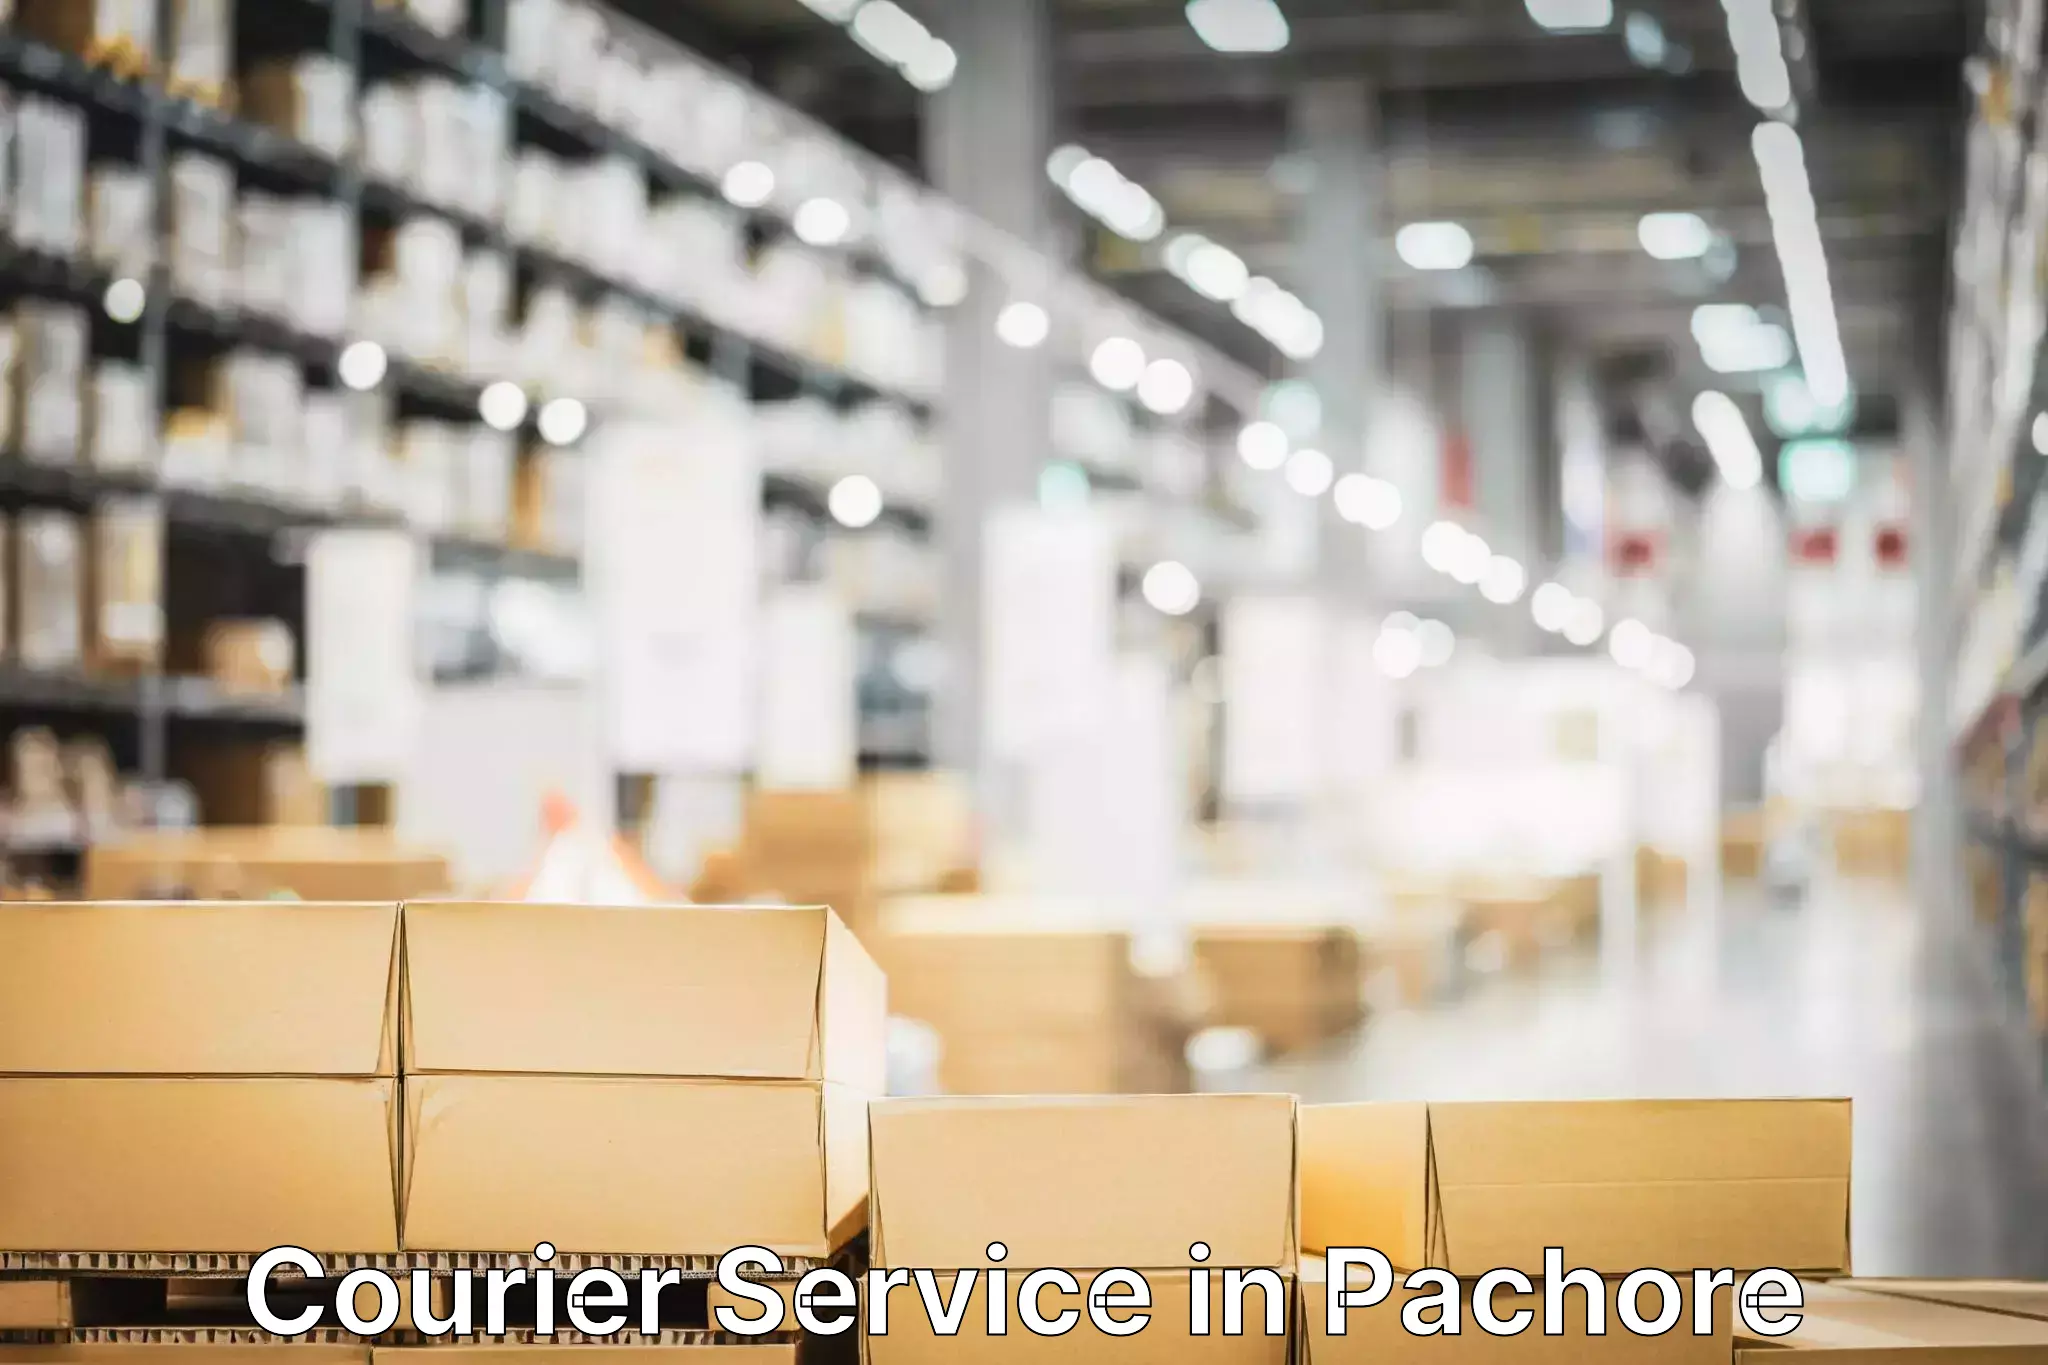 Efficient cargo handling in Pachore